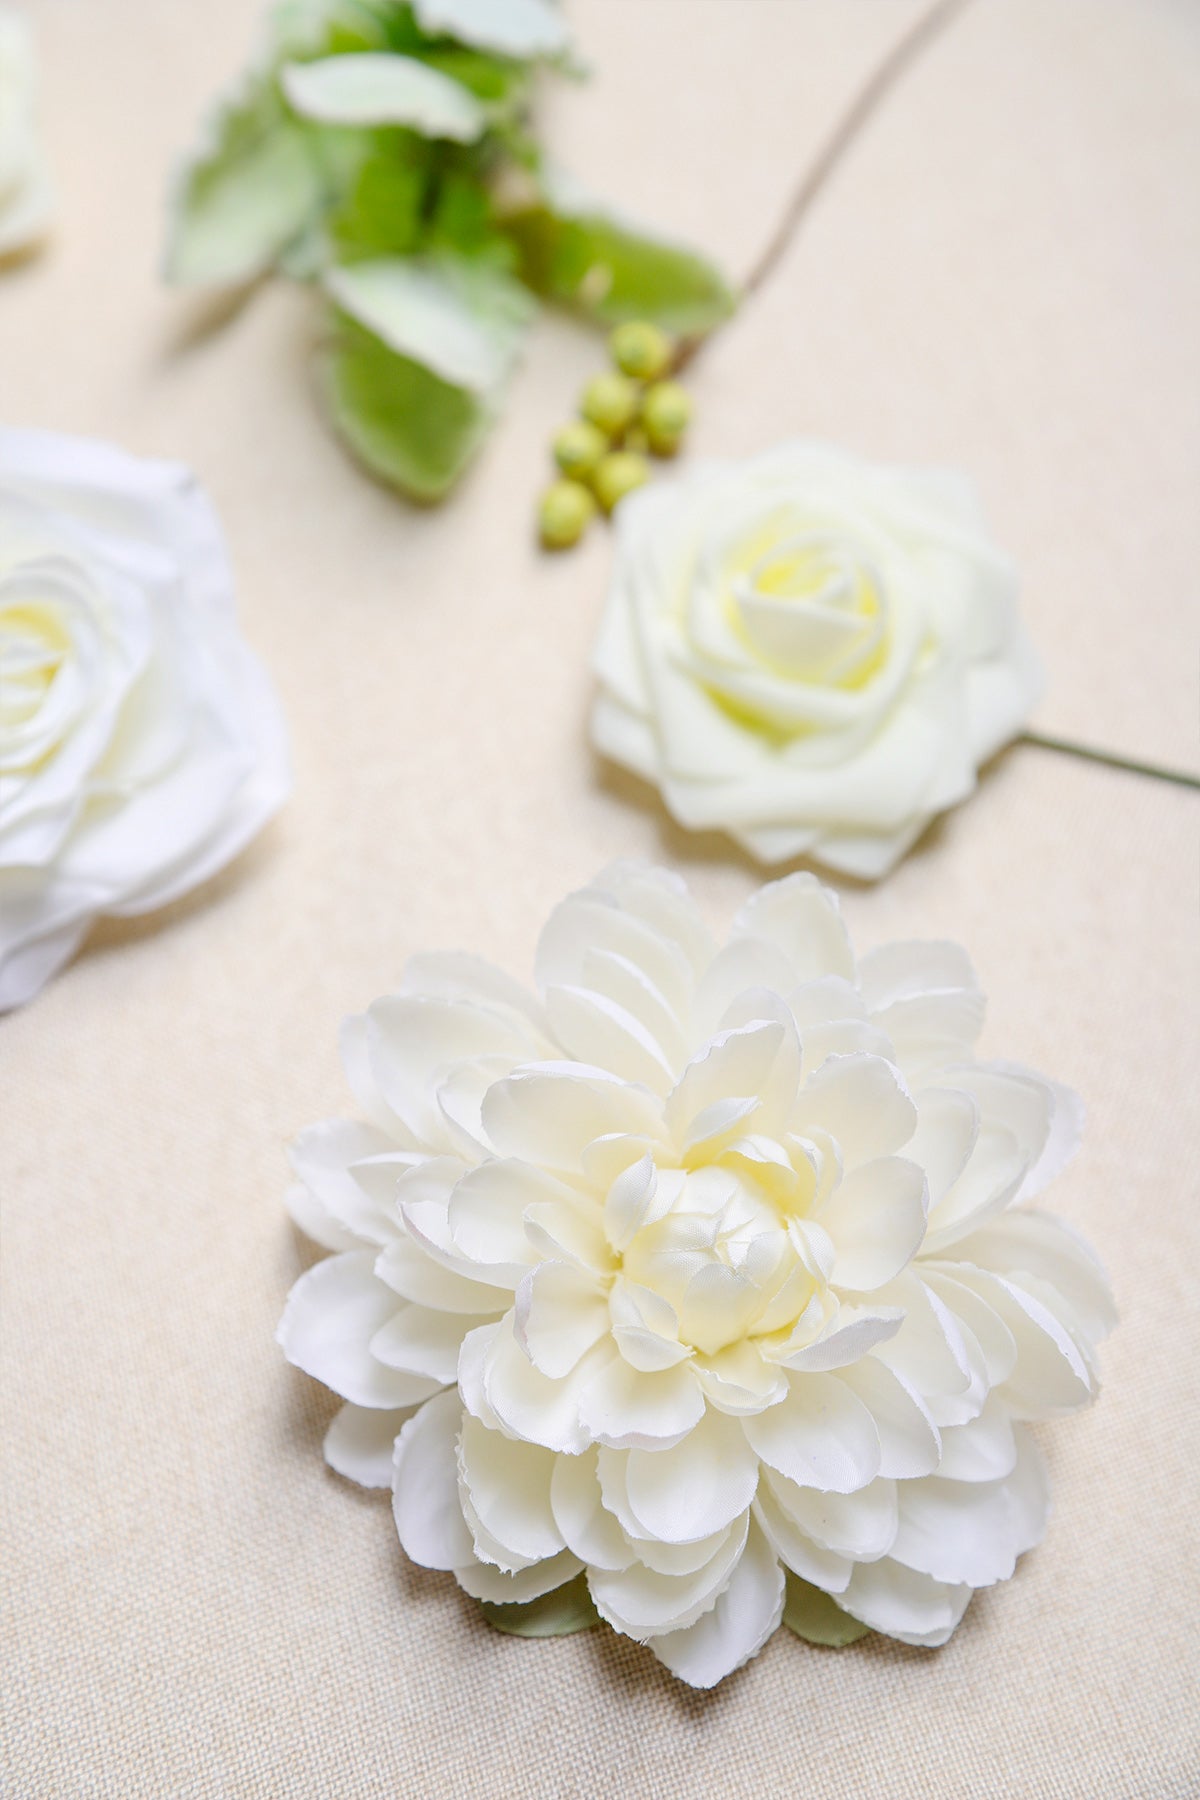 Artificial Flowers - Wedding Flower Box Set - DIY Bridal Bouquet, Centerpieces, Aisle Flower Decor - Ivory & Cream